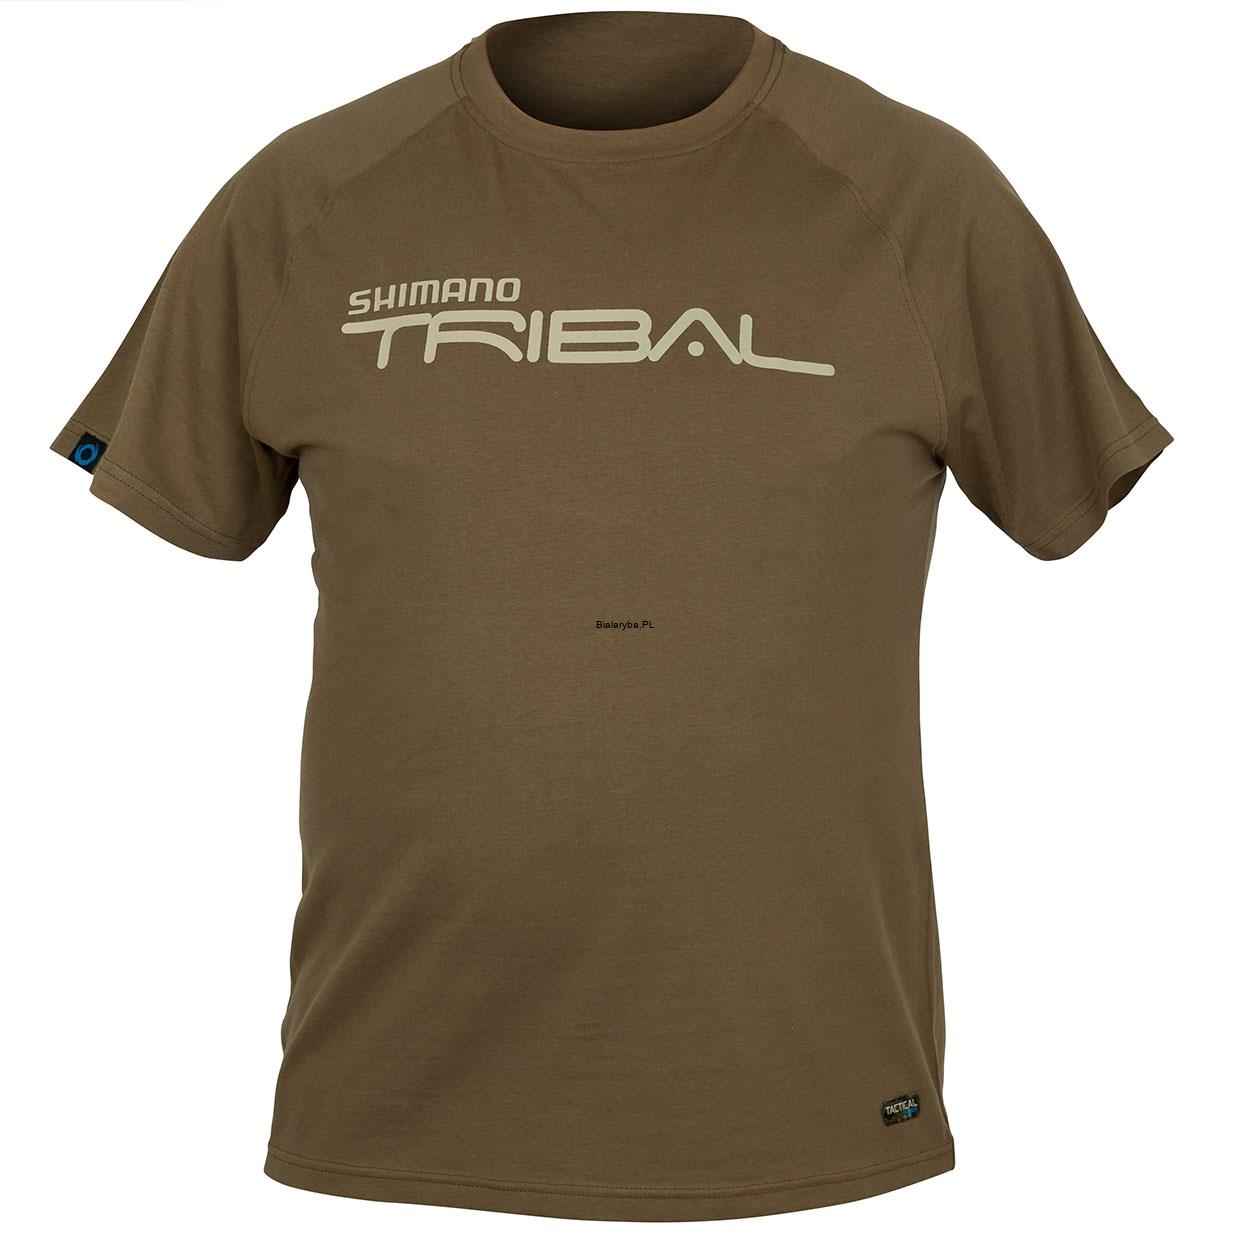 Koszulka Shimano T-Shirt Tribal Tactical XL oliwka, SHTTW16XL